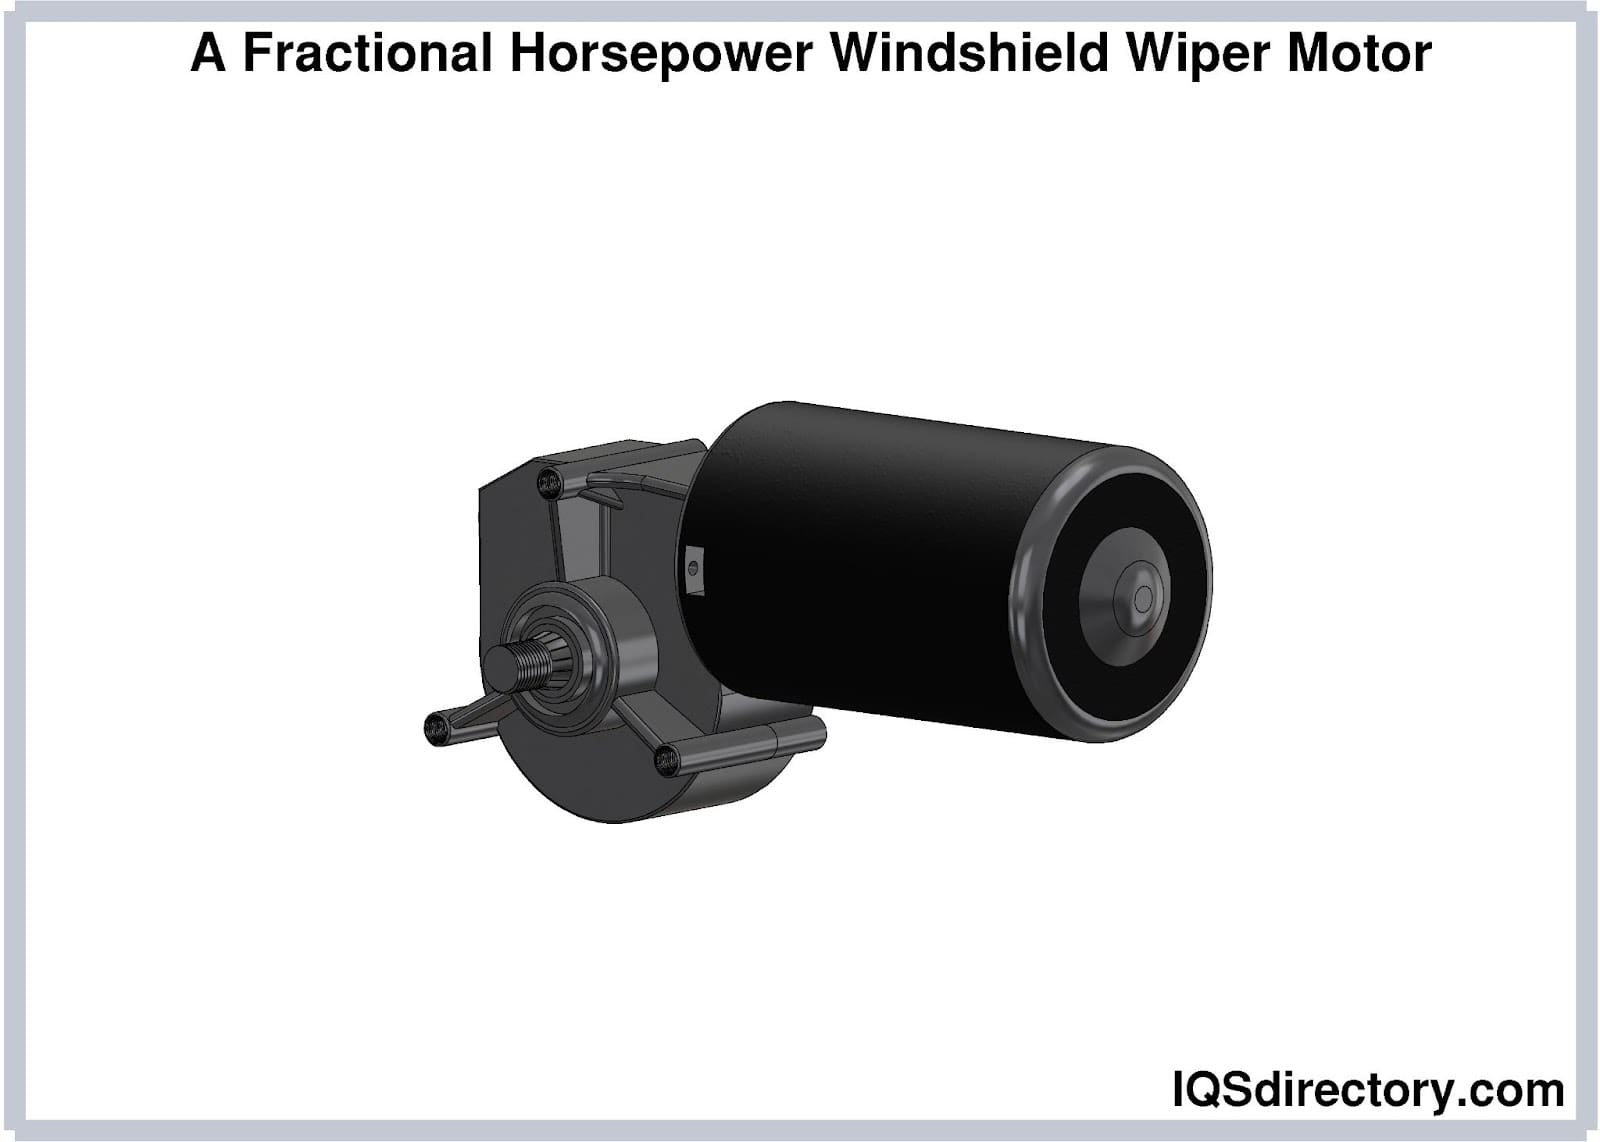 A Fractional Horsepower Windshield Wiper Motor